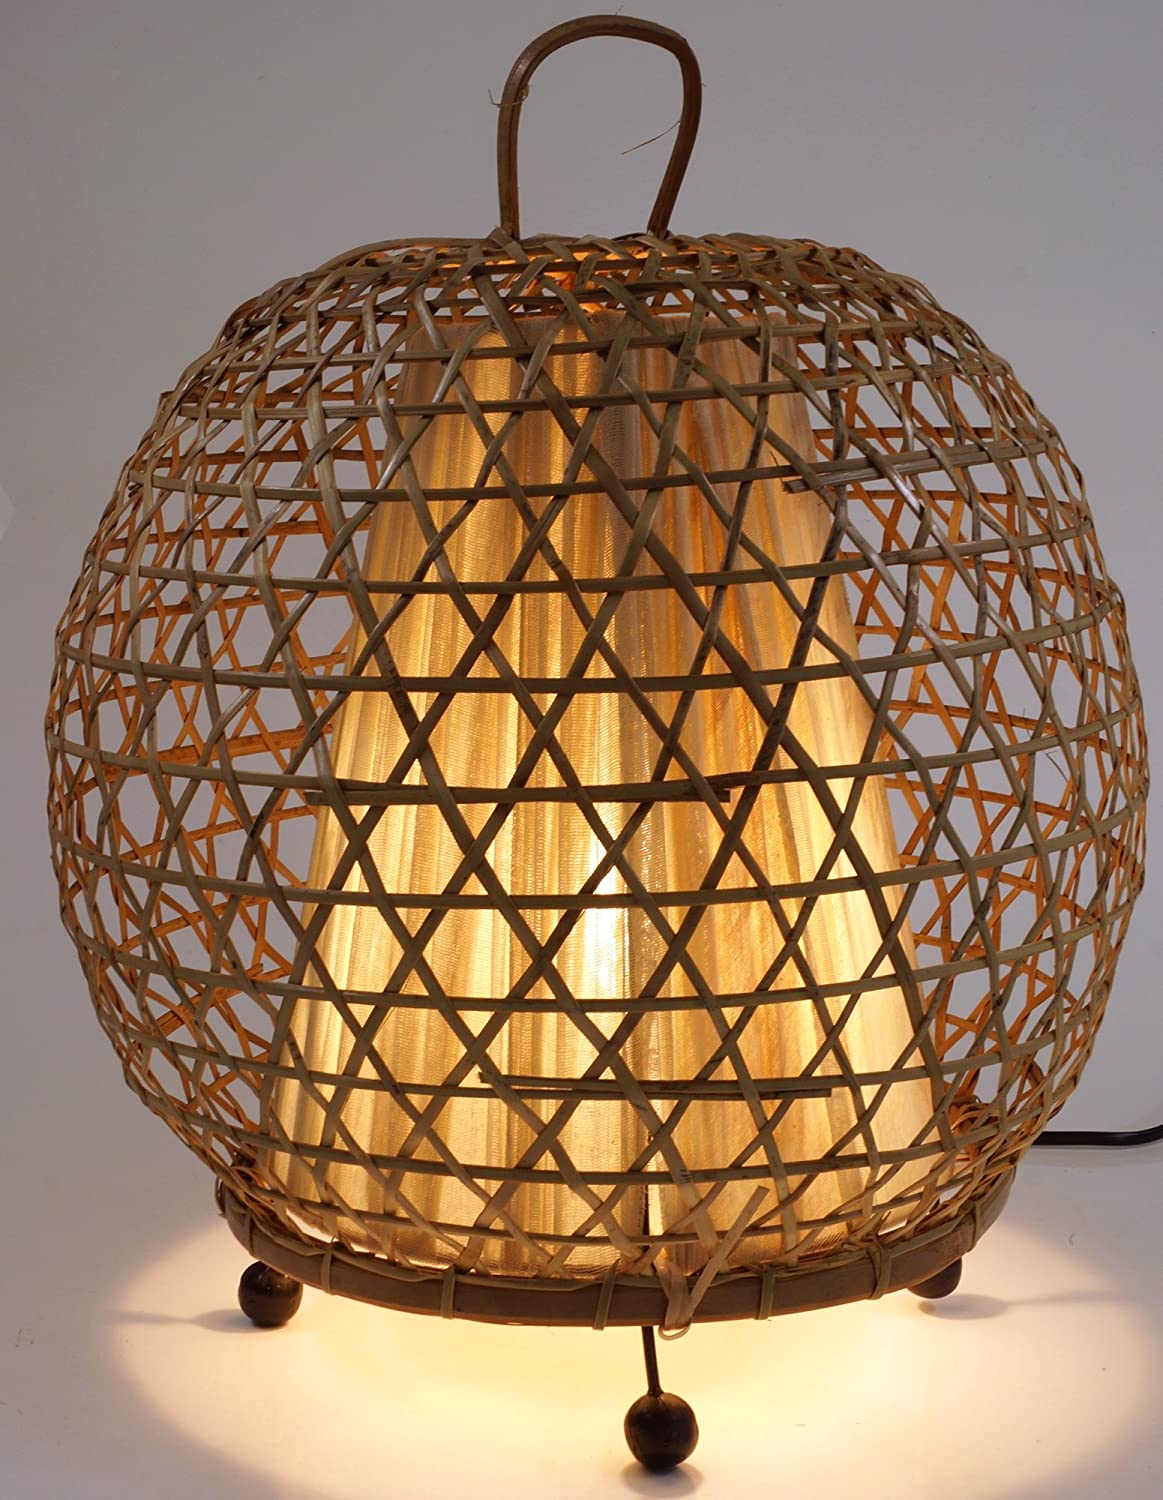 Guru-Shop Apollon 70 Table Lamp, Handmade in Bali, Natural Material, Bamboo, Cotton